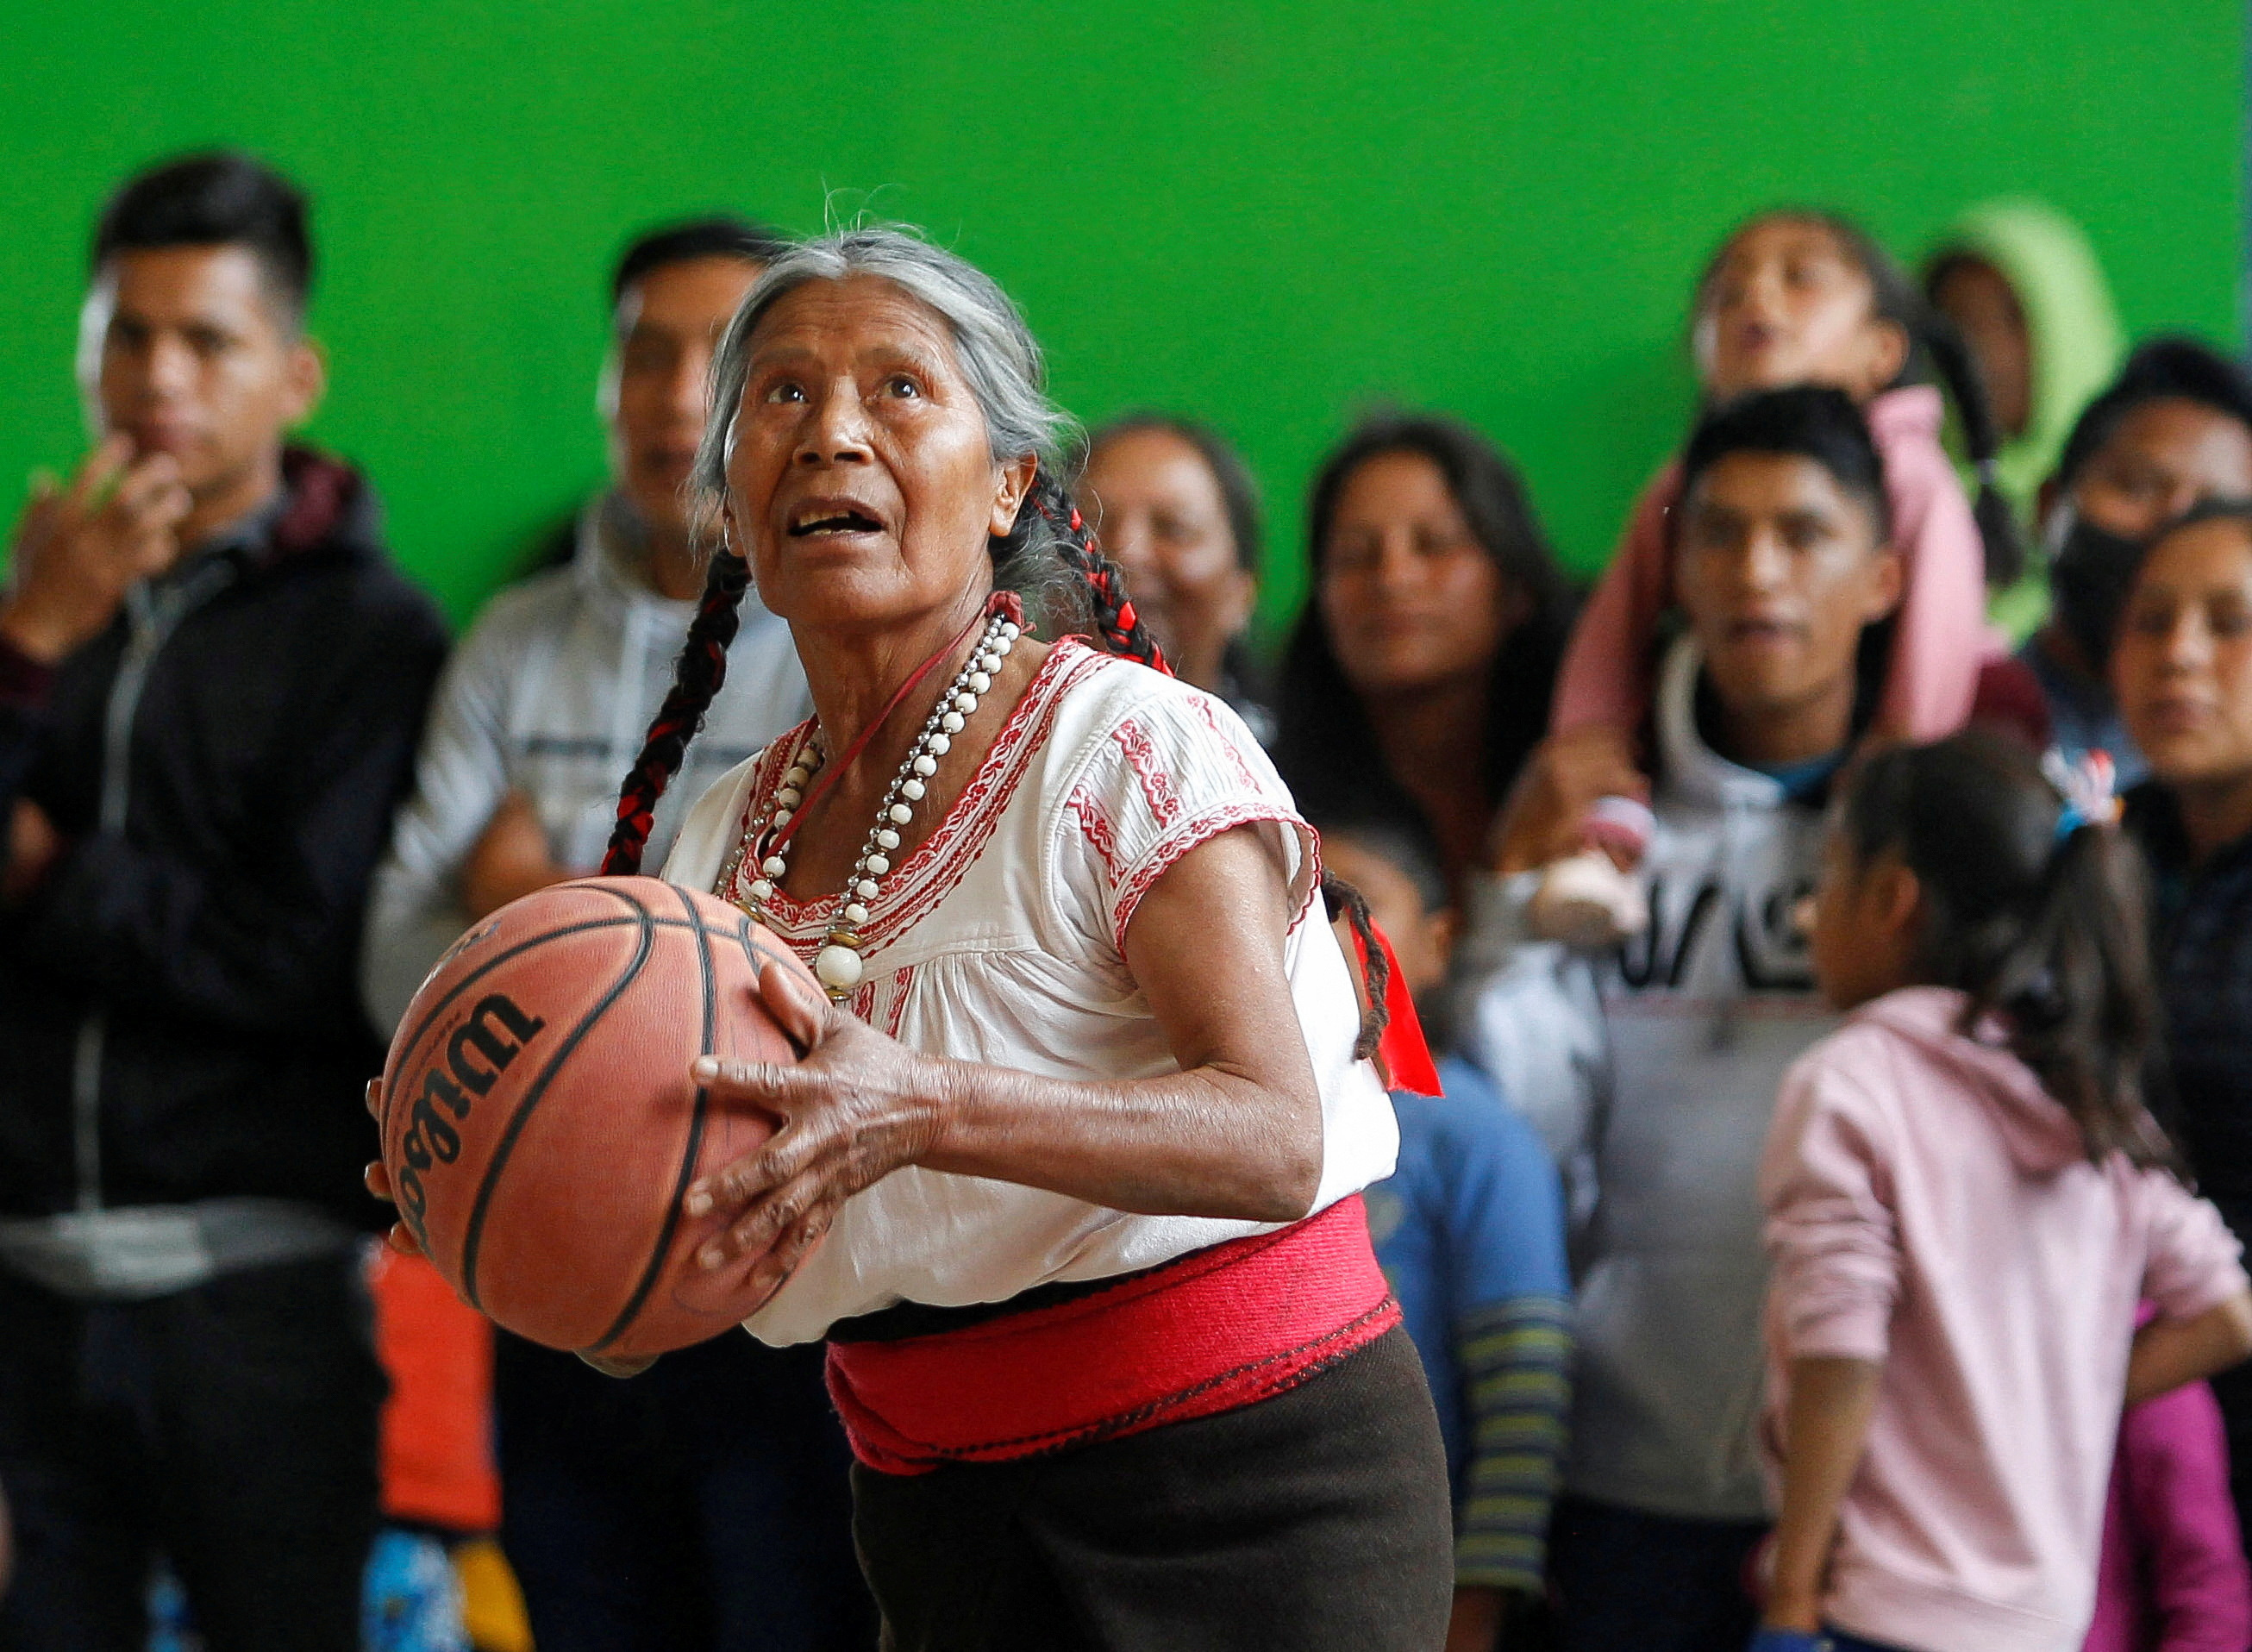 Mexico's 'Granny Jordan' becomes viral TikTok basketball star